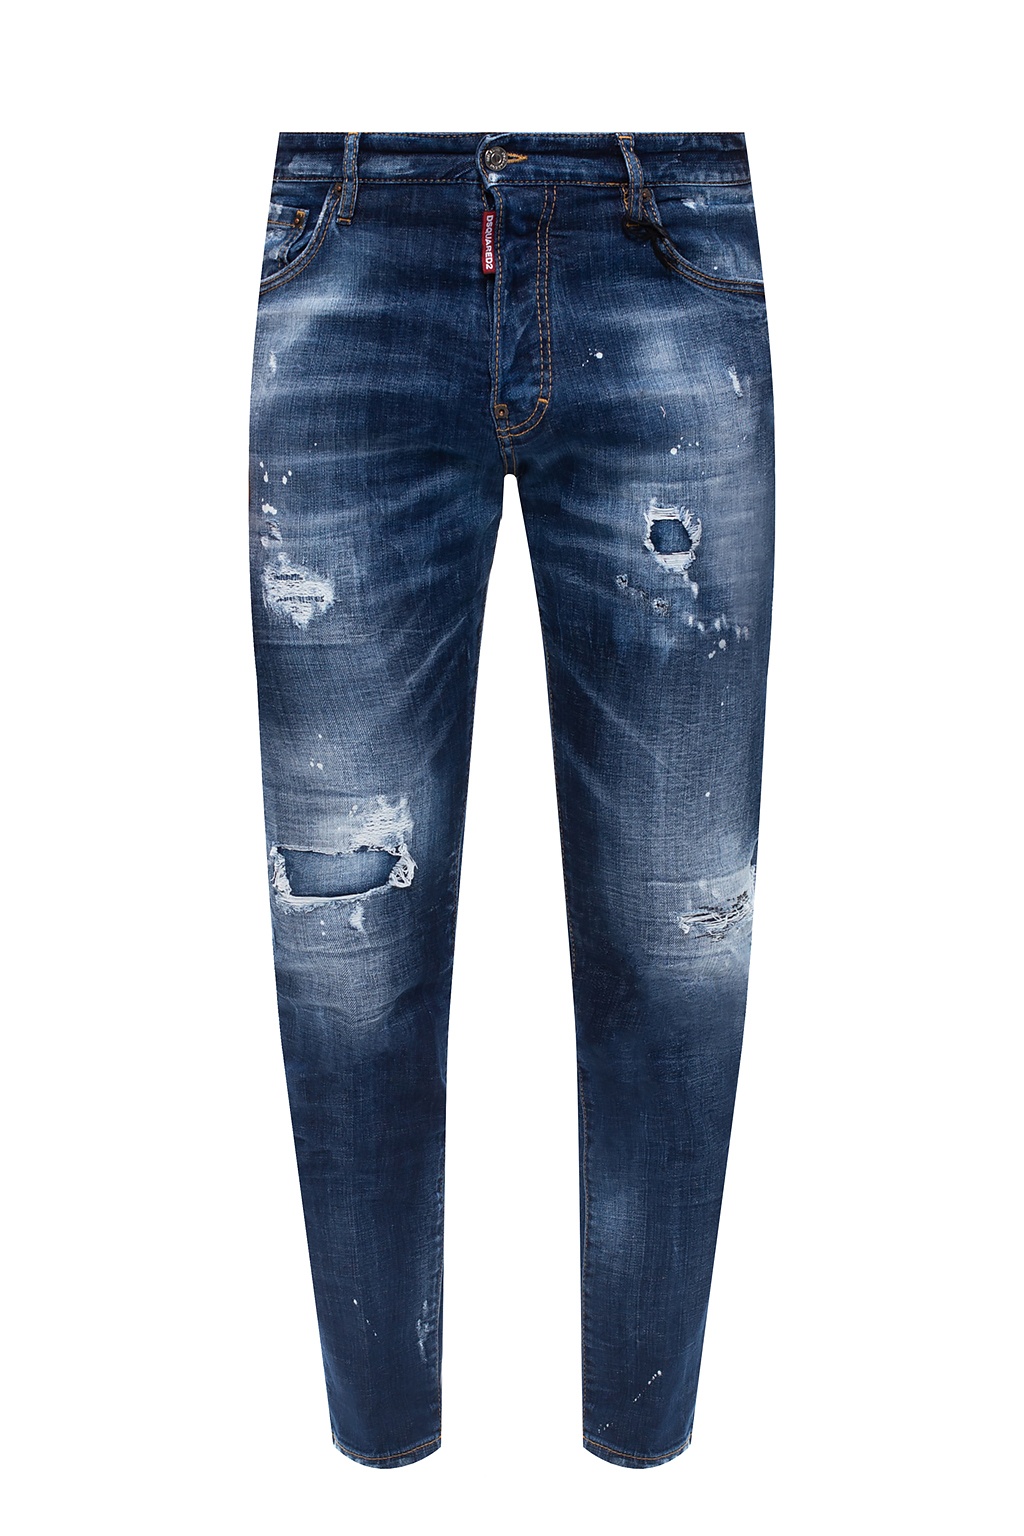 Dsquared2 'Sexy Mercury Jean' jeans | Men's Clothing | IetpShops